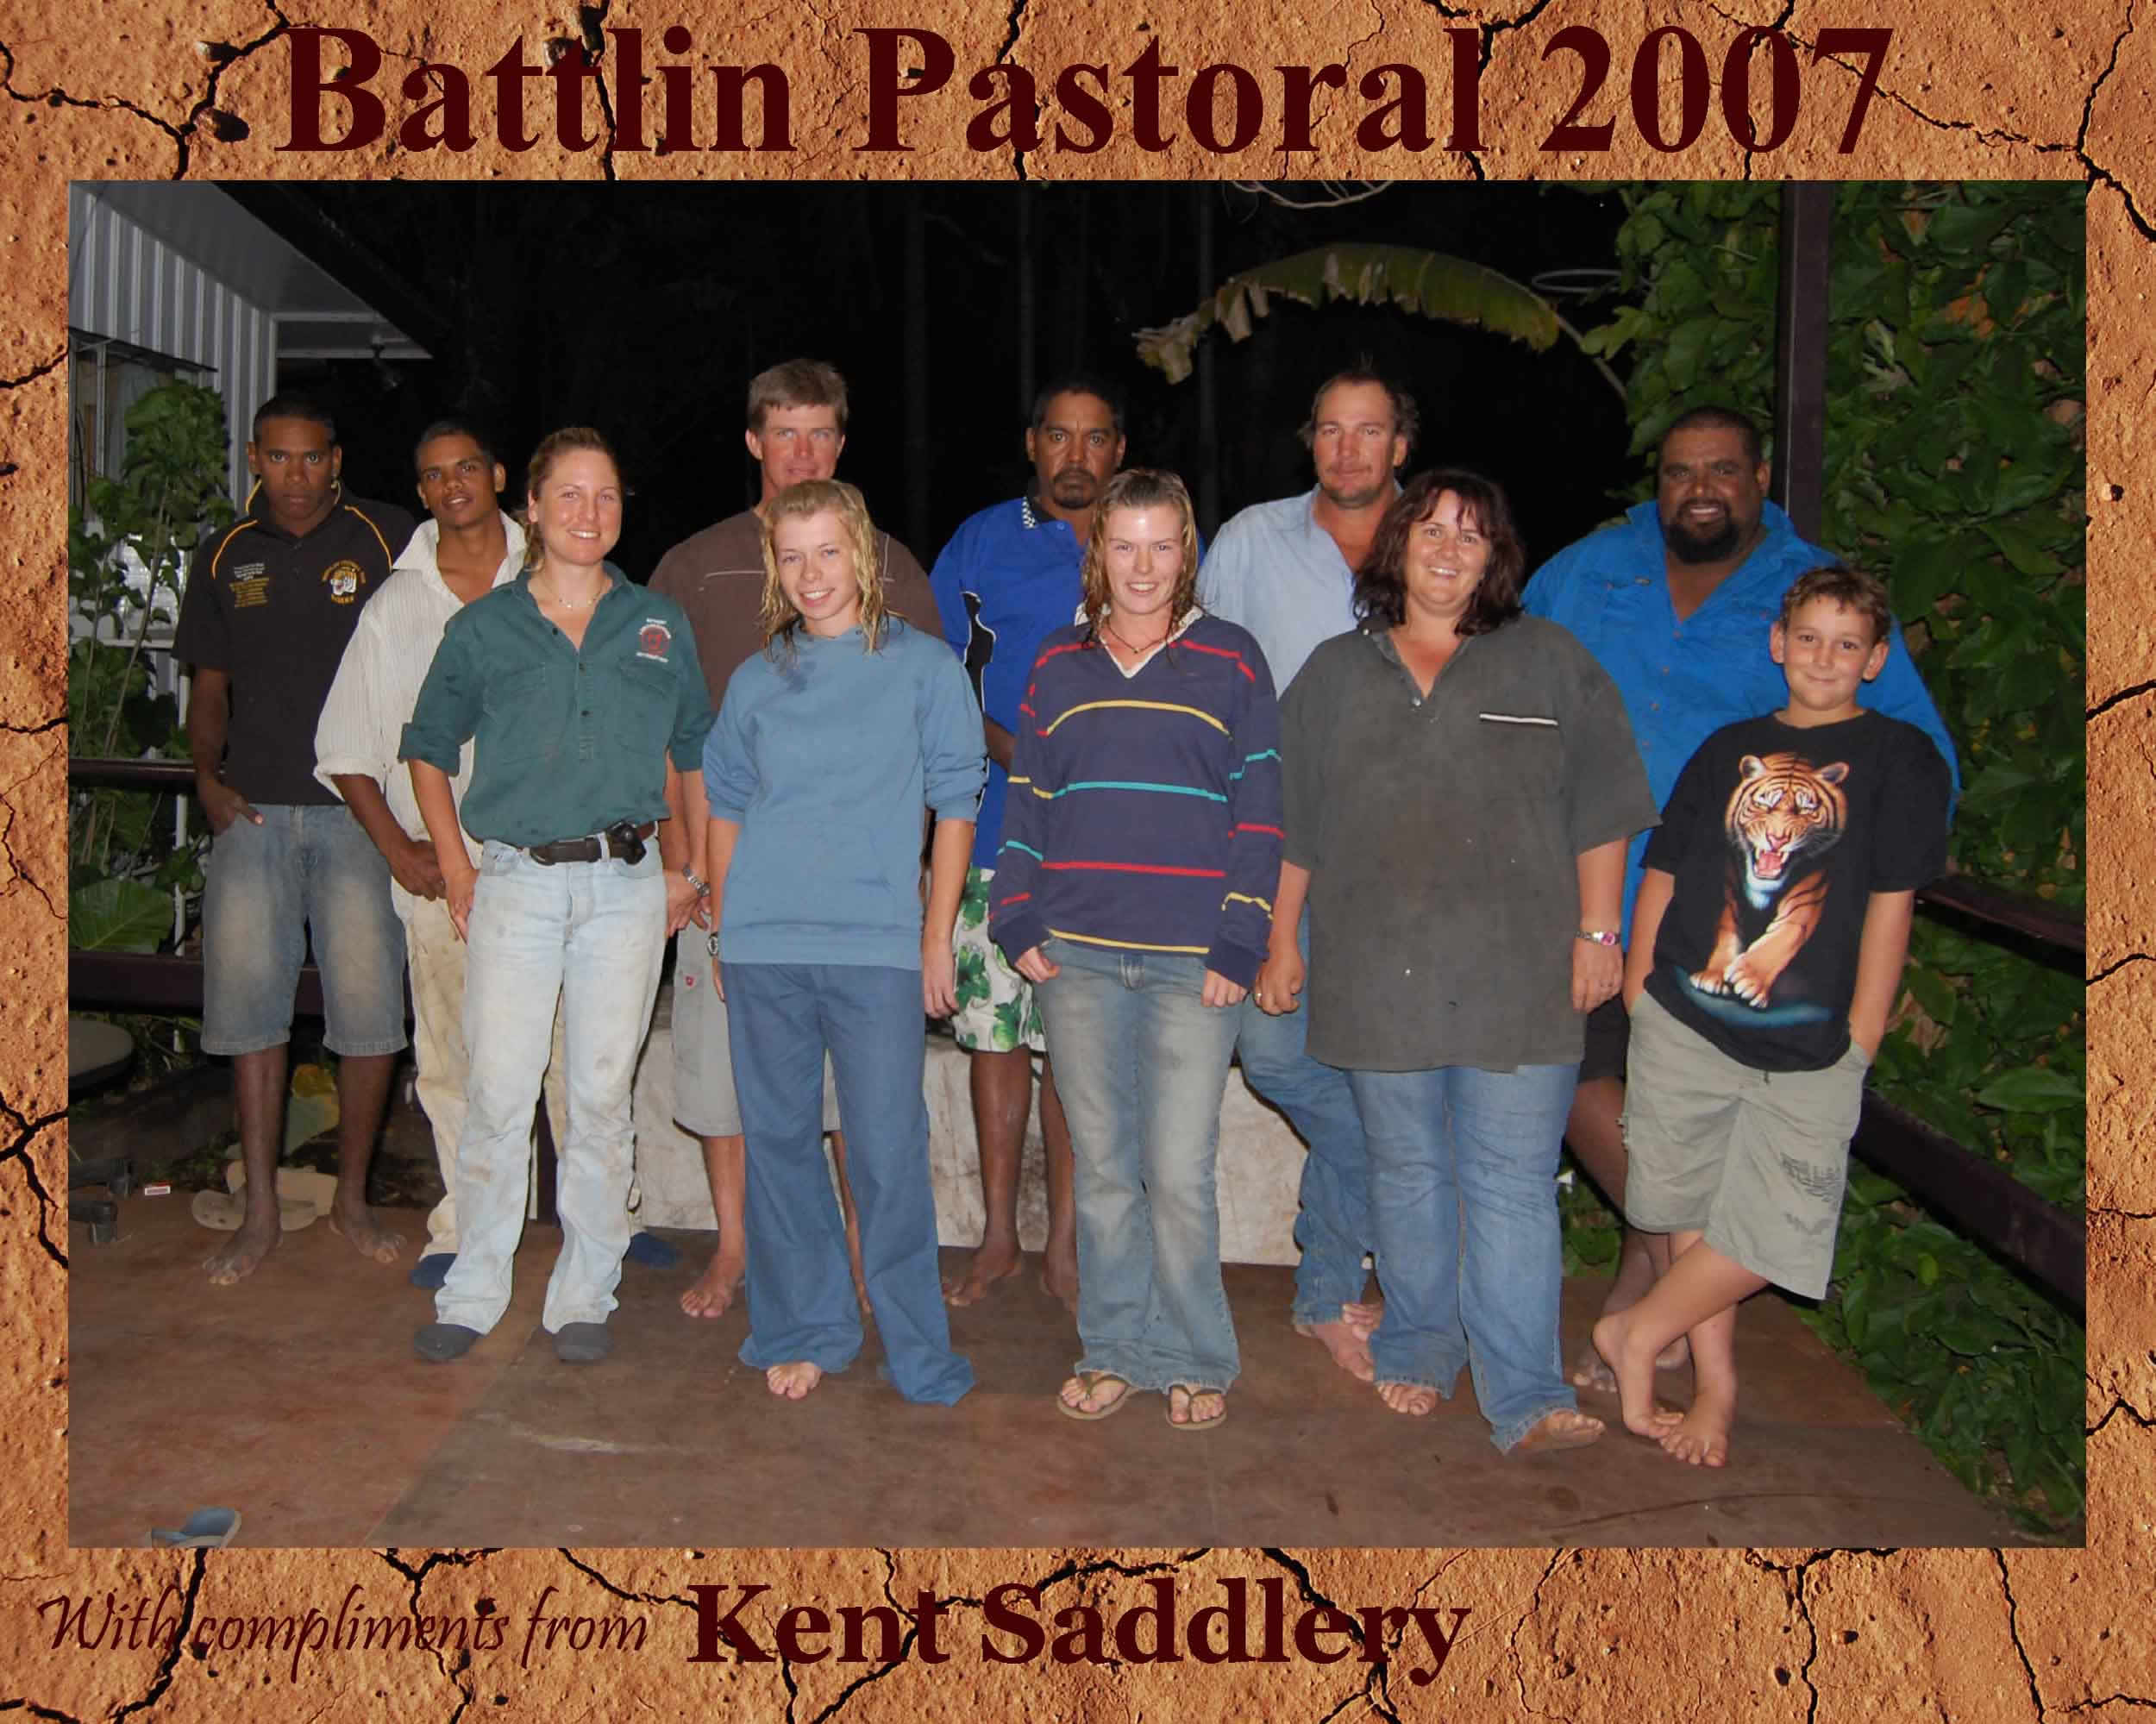 Northern Territory - Battlin Pastoral 20